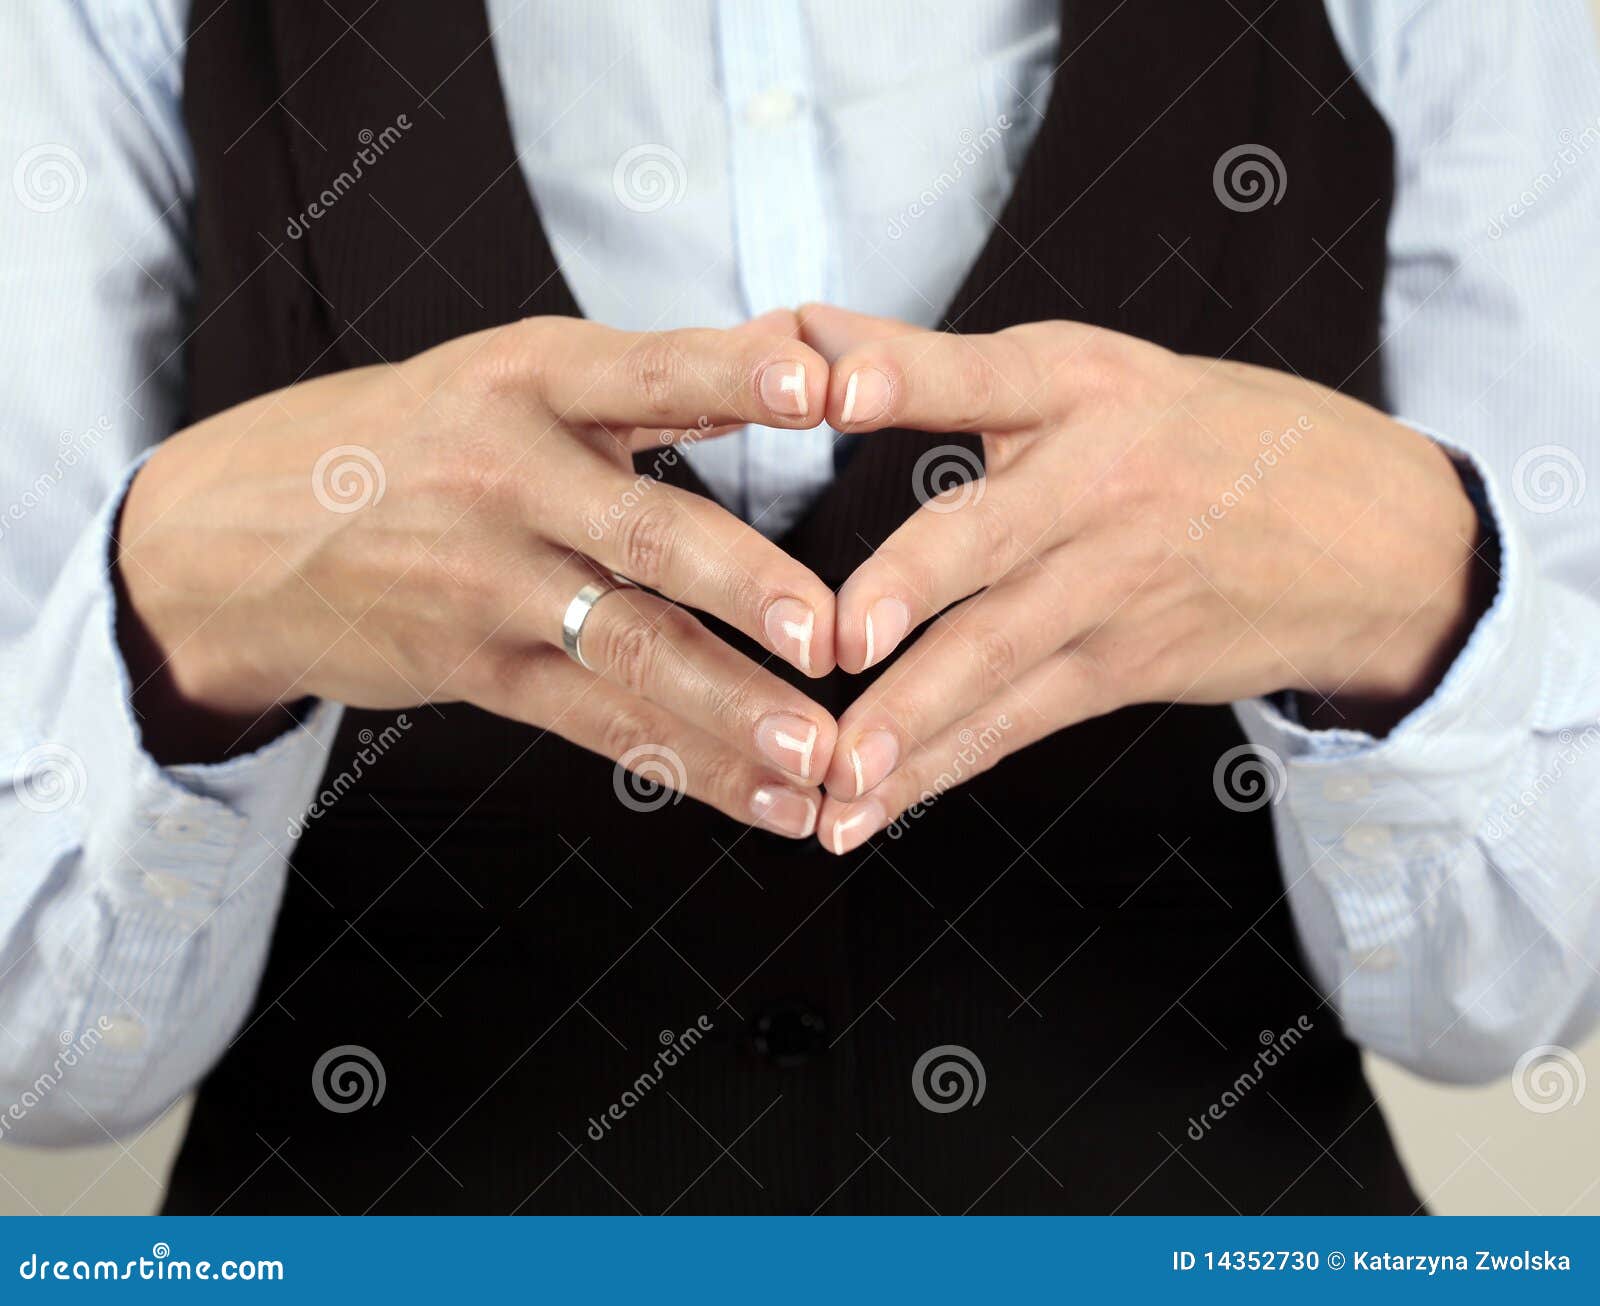 Aardappelen gebied essay Business Body Language stock photo. Image of finger, touching - 14352730